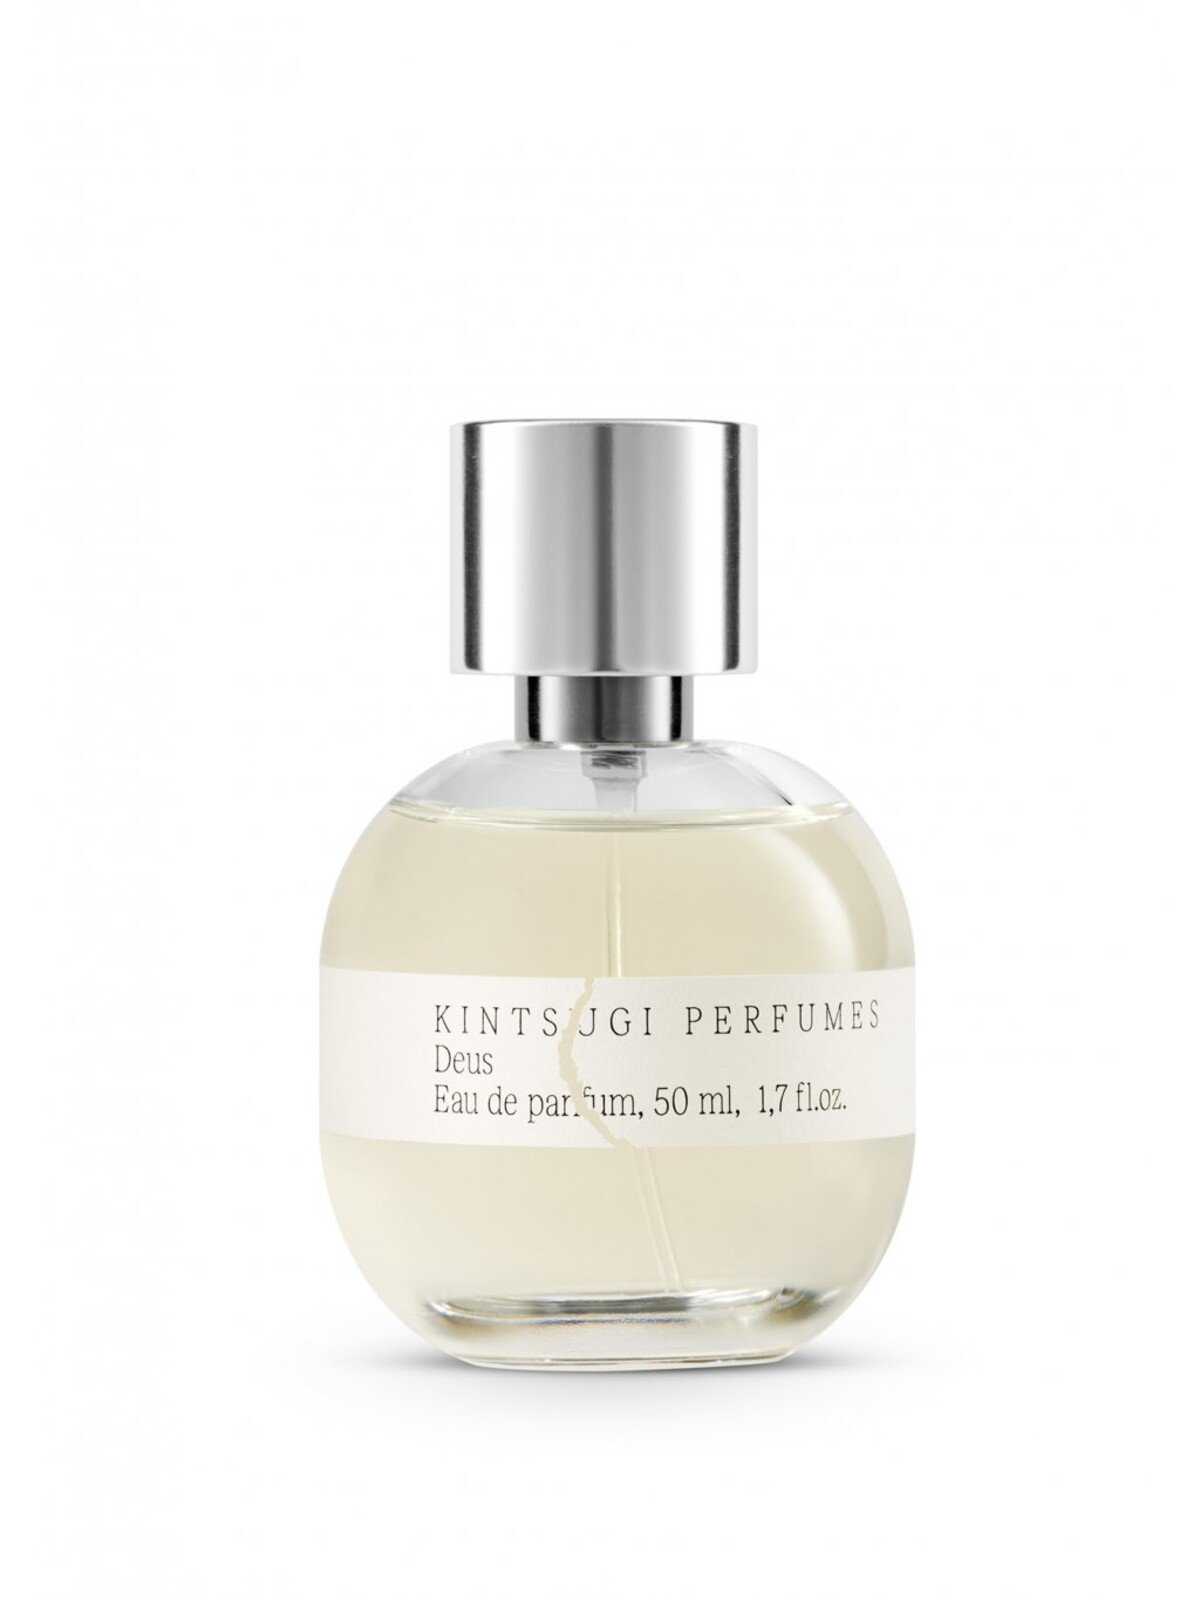 Kintsugi je česká značka parfumov. 